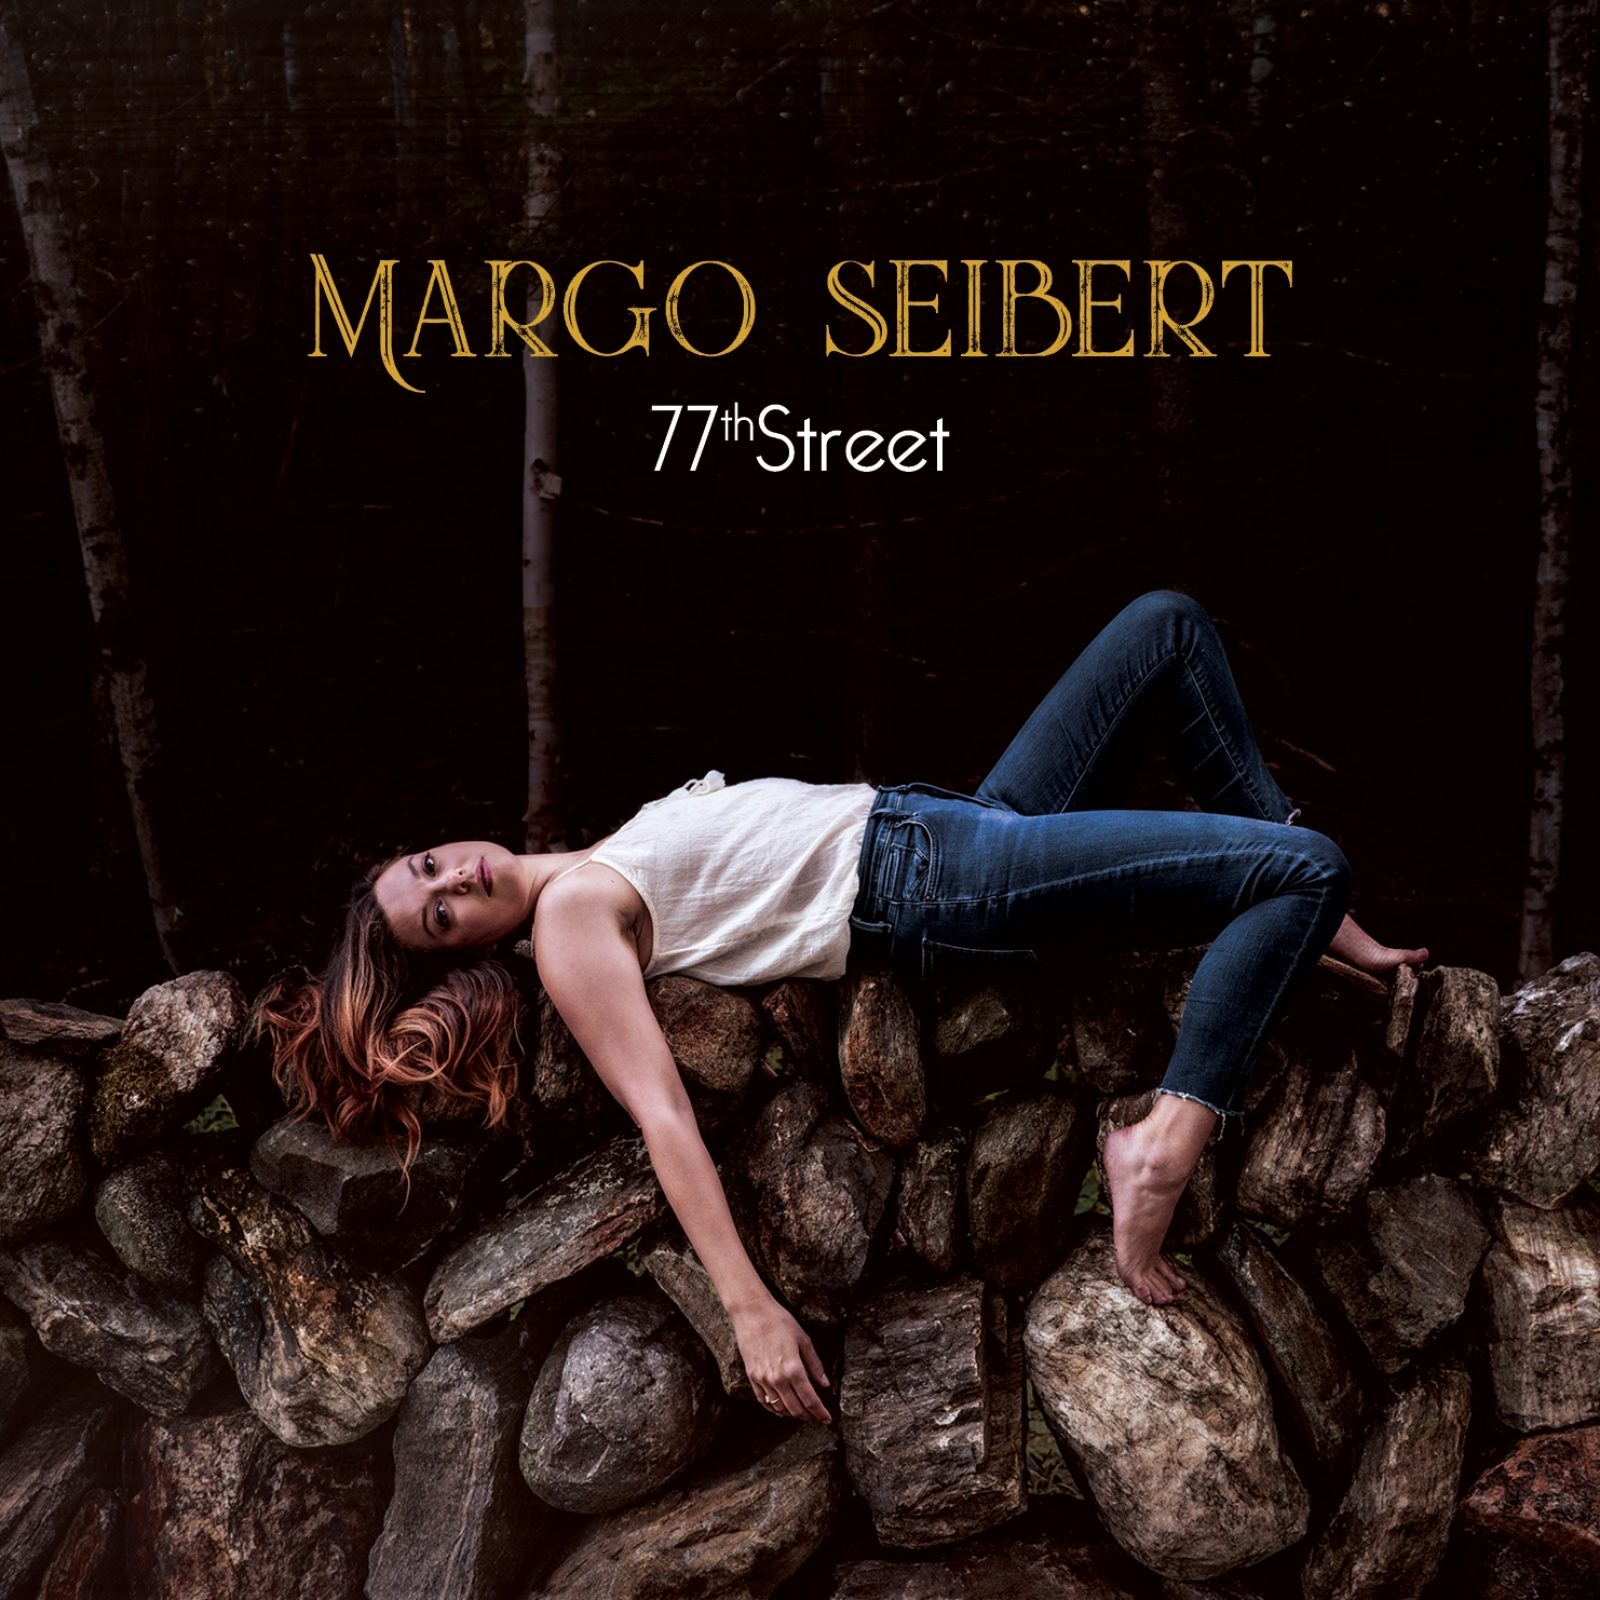 Margo Seibert debut solo album